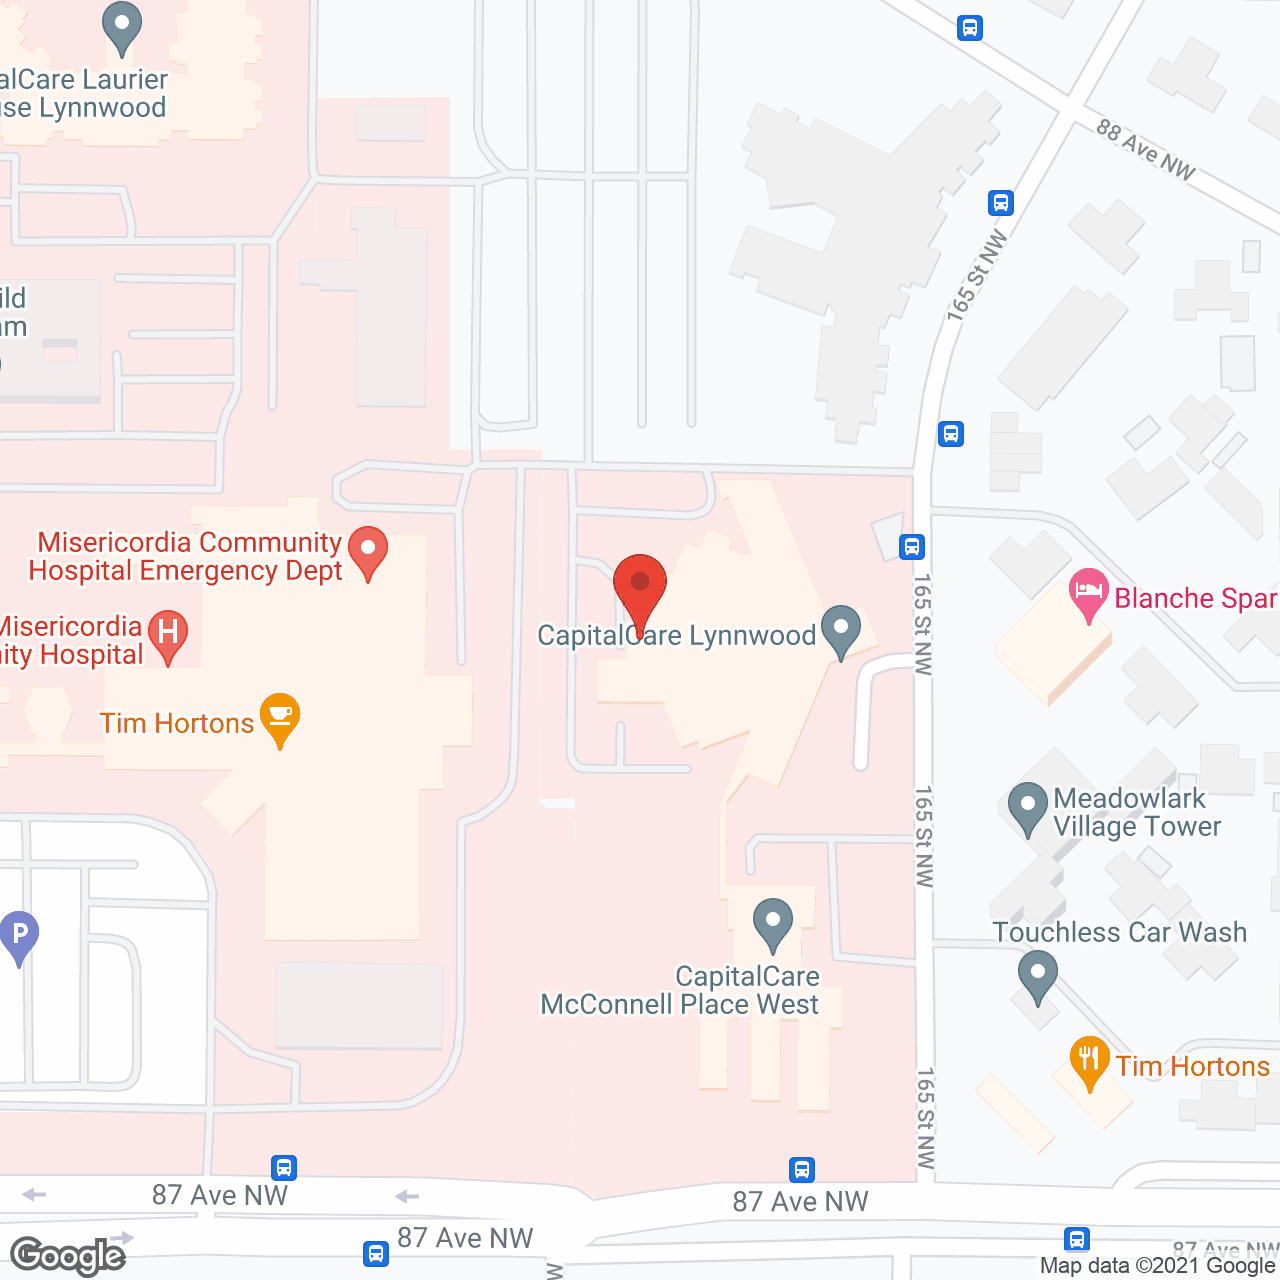 Capital Care Lynnwood in google map